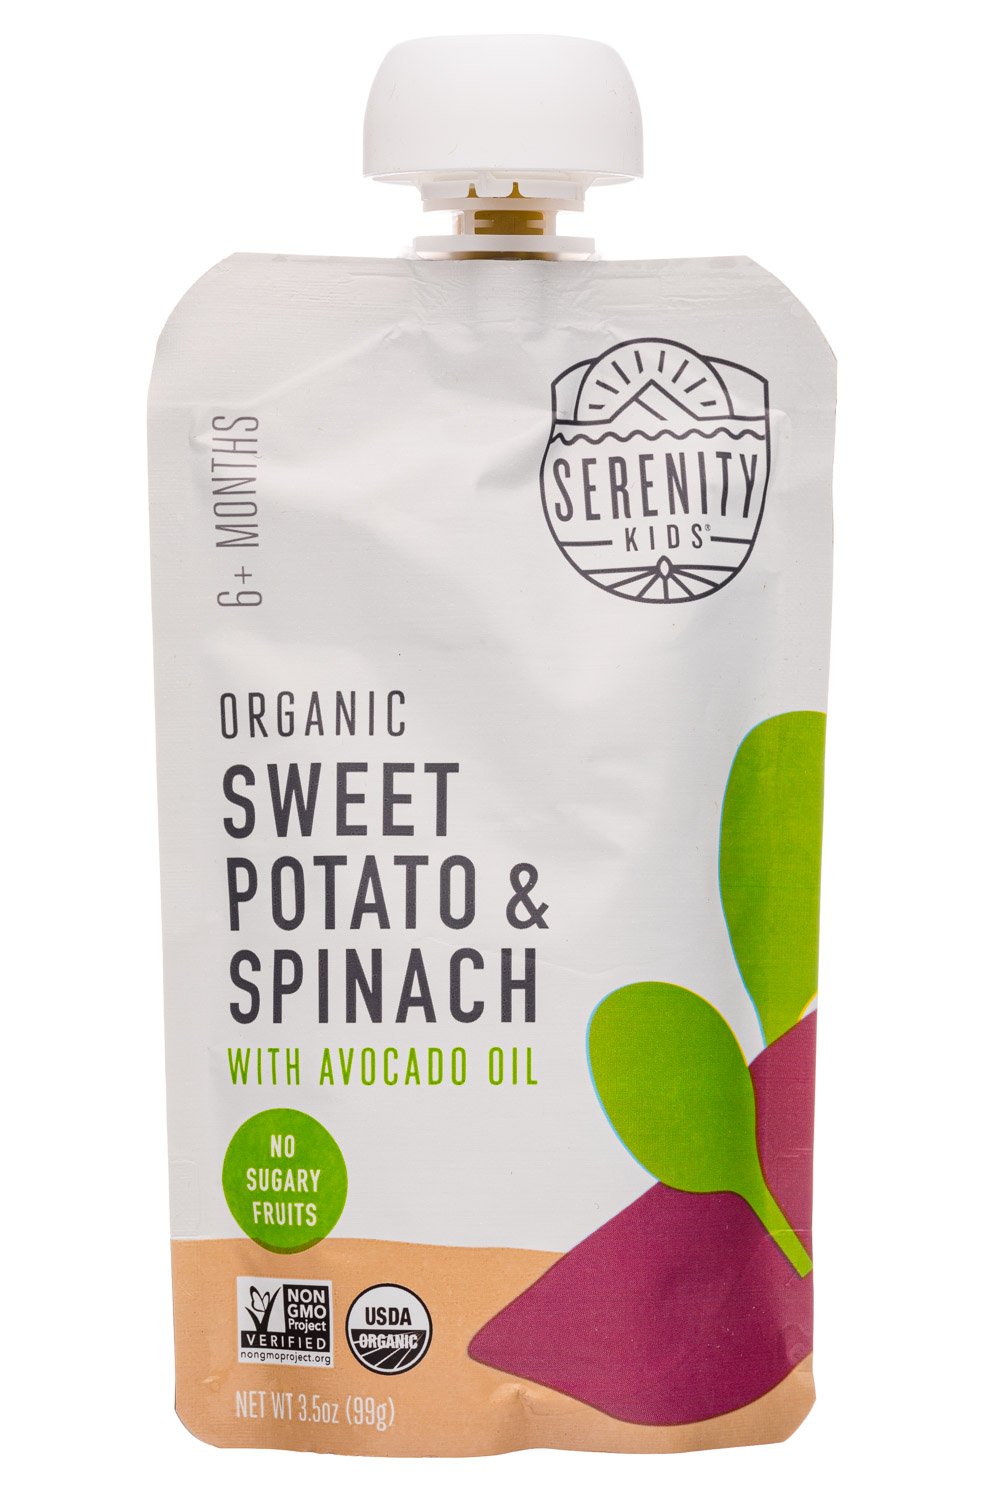 Organic Sweet Potato & Spinach with Avocado Oil